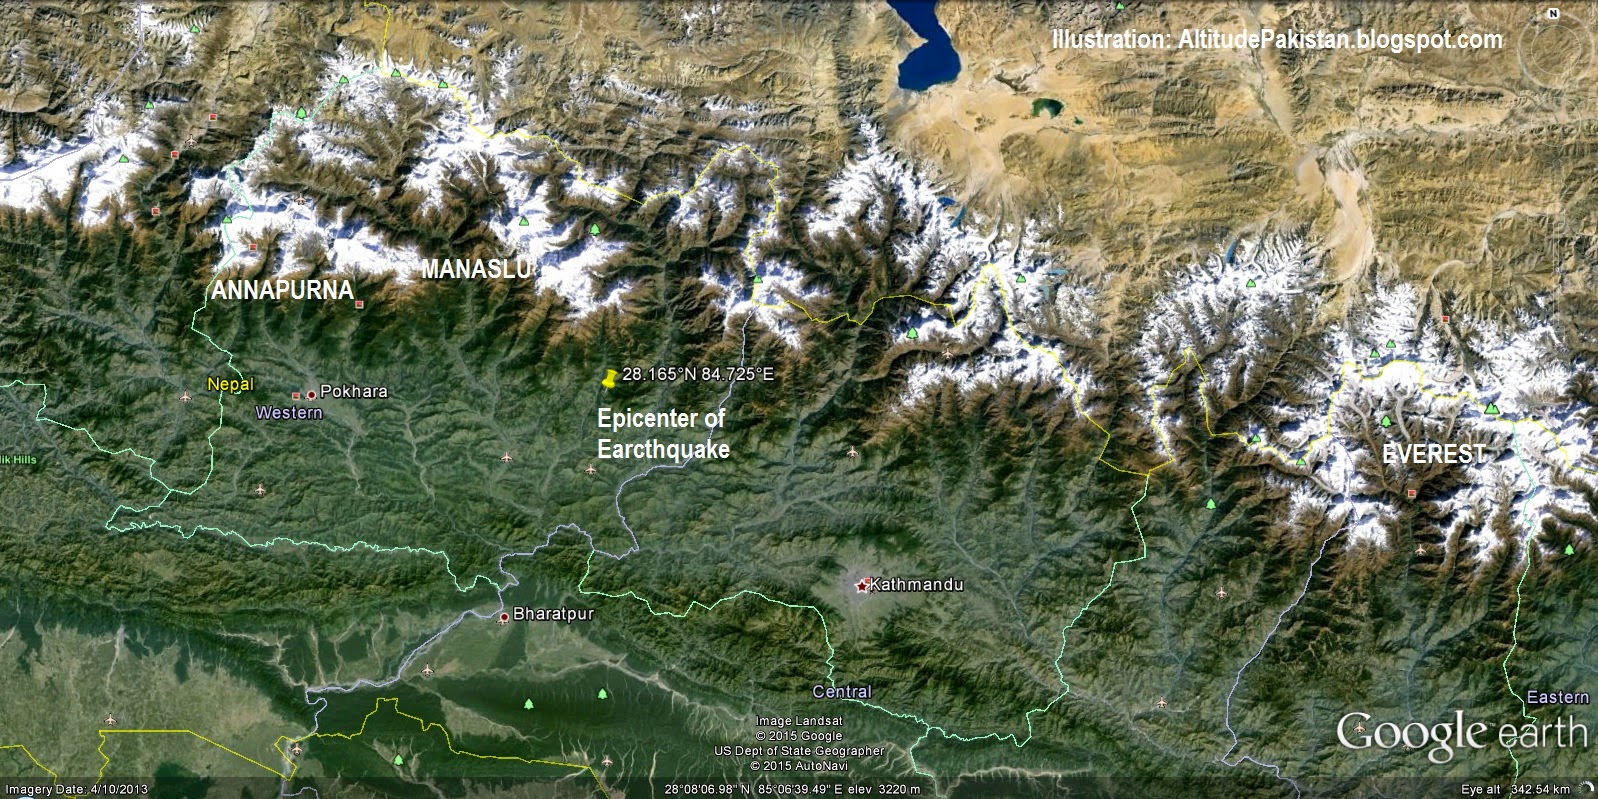 The Earthquake location. 40km Southeast of Manaslu, 210km west of Everest.